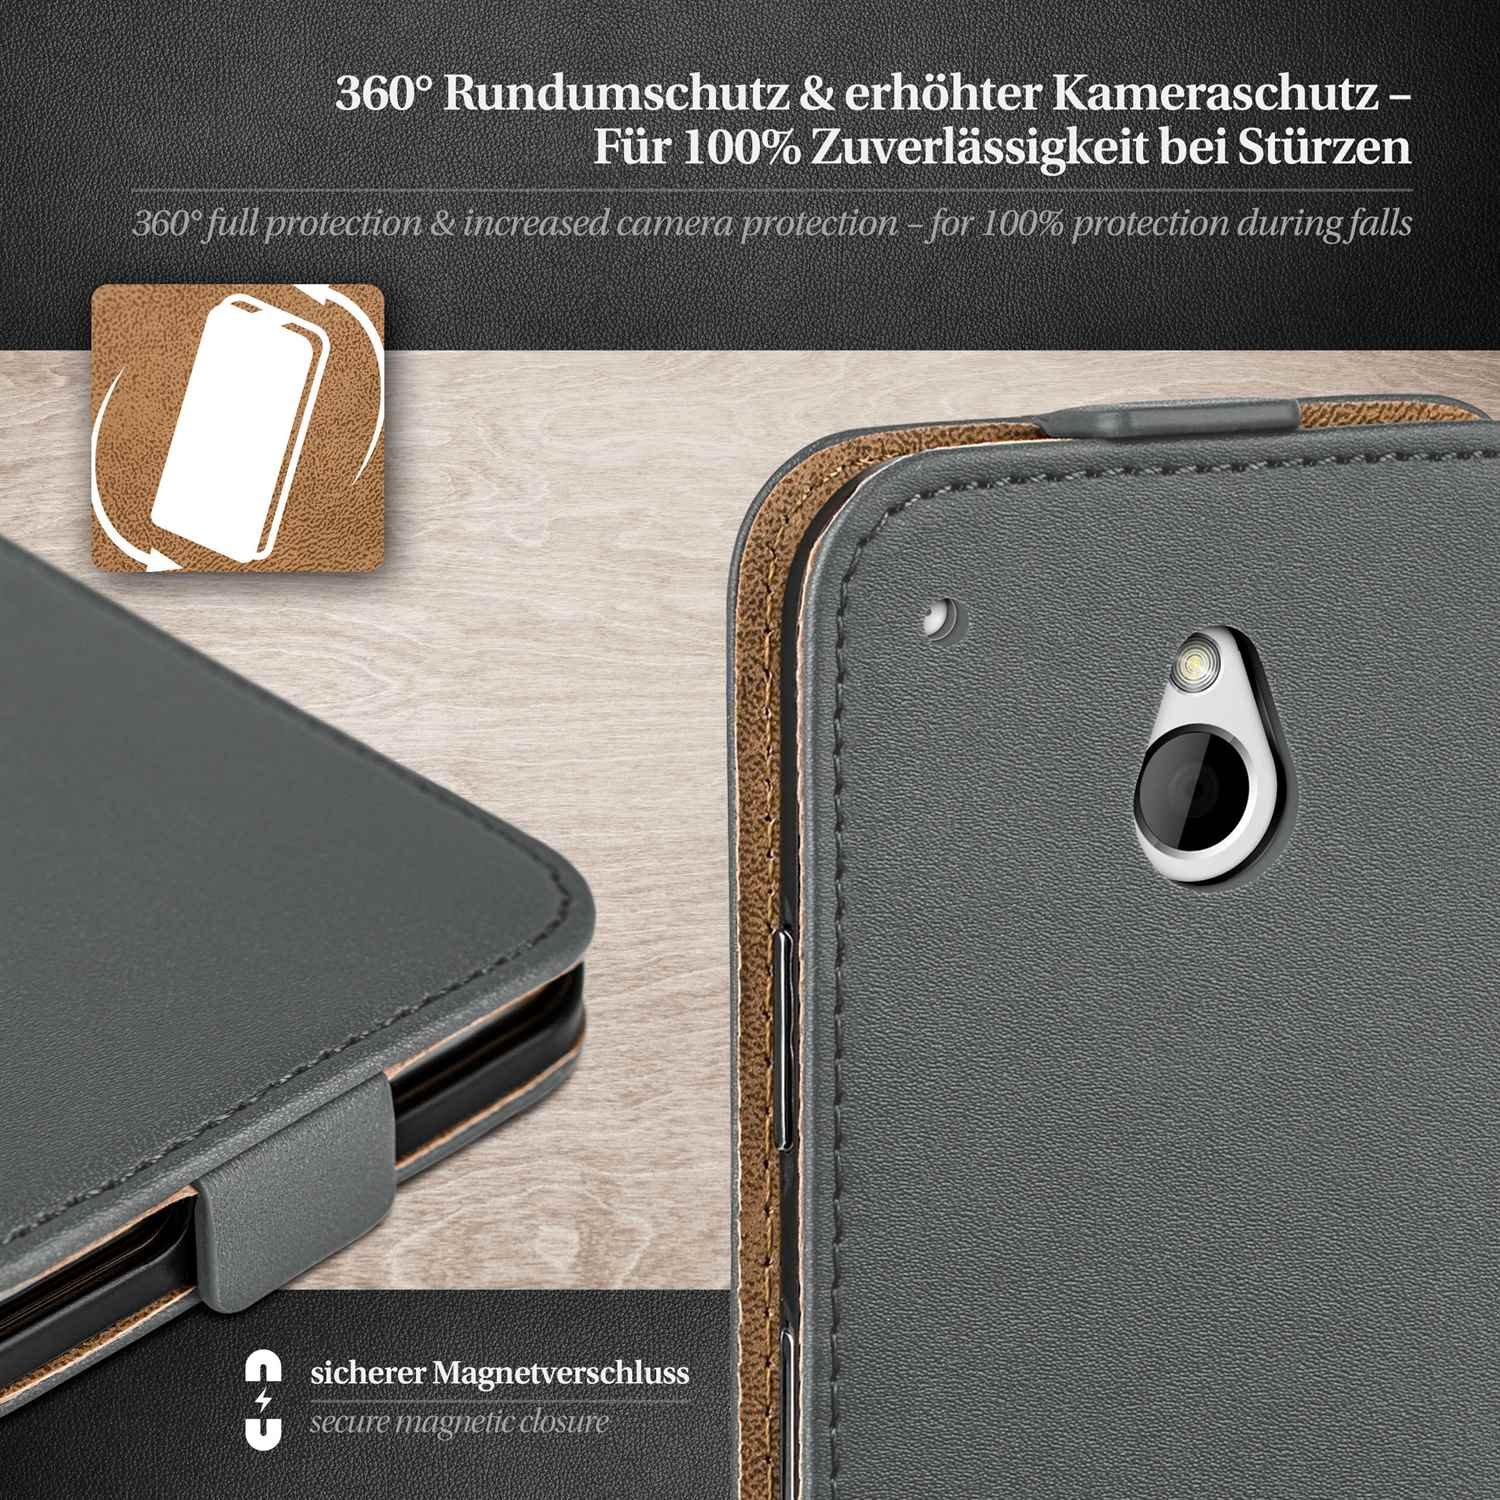 MOEX Flip Case, Flip Mini, Anthracite-Gray Cover, One HTC